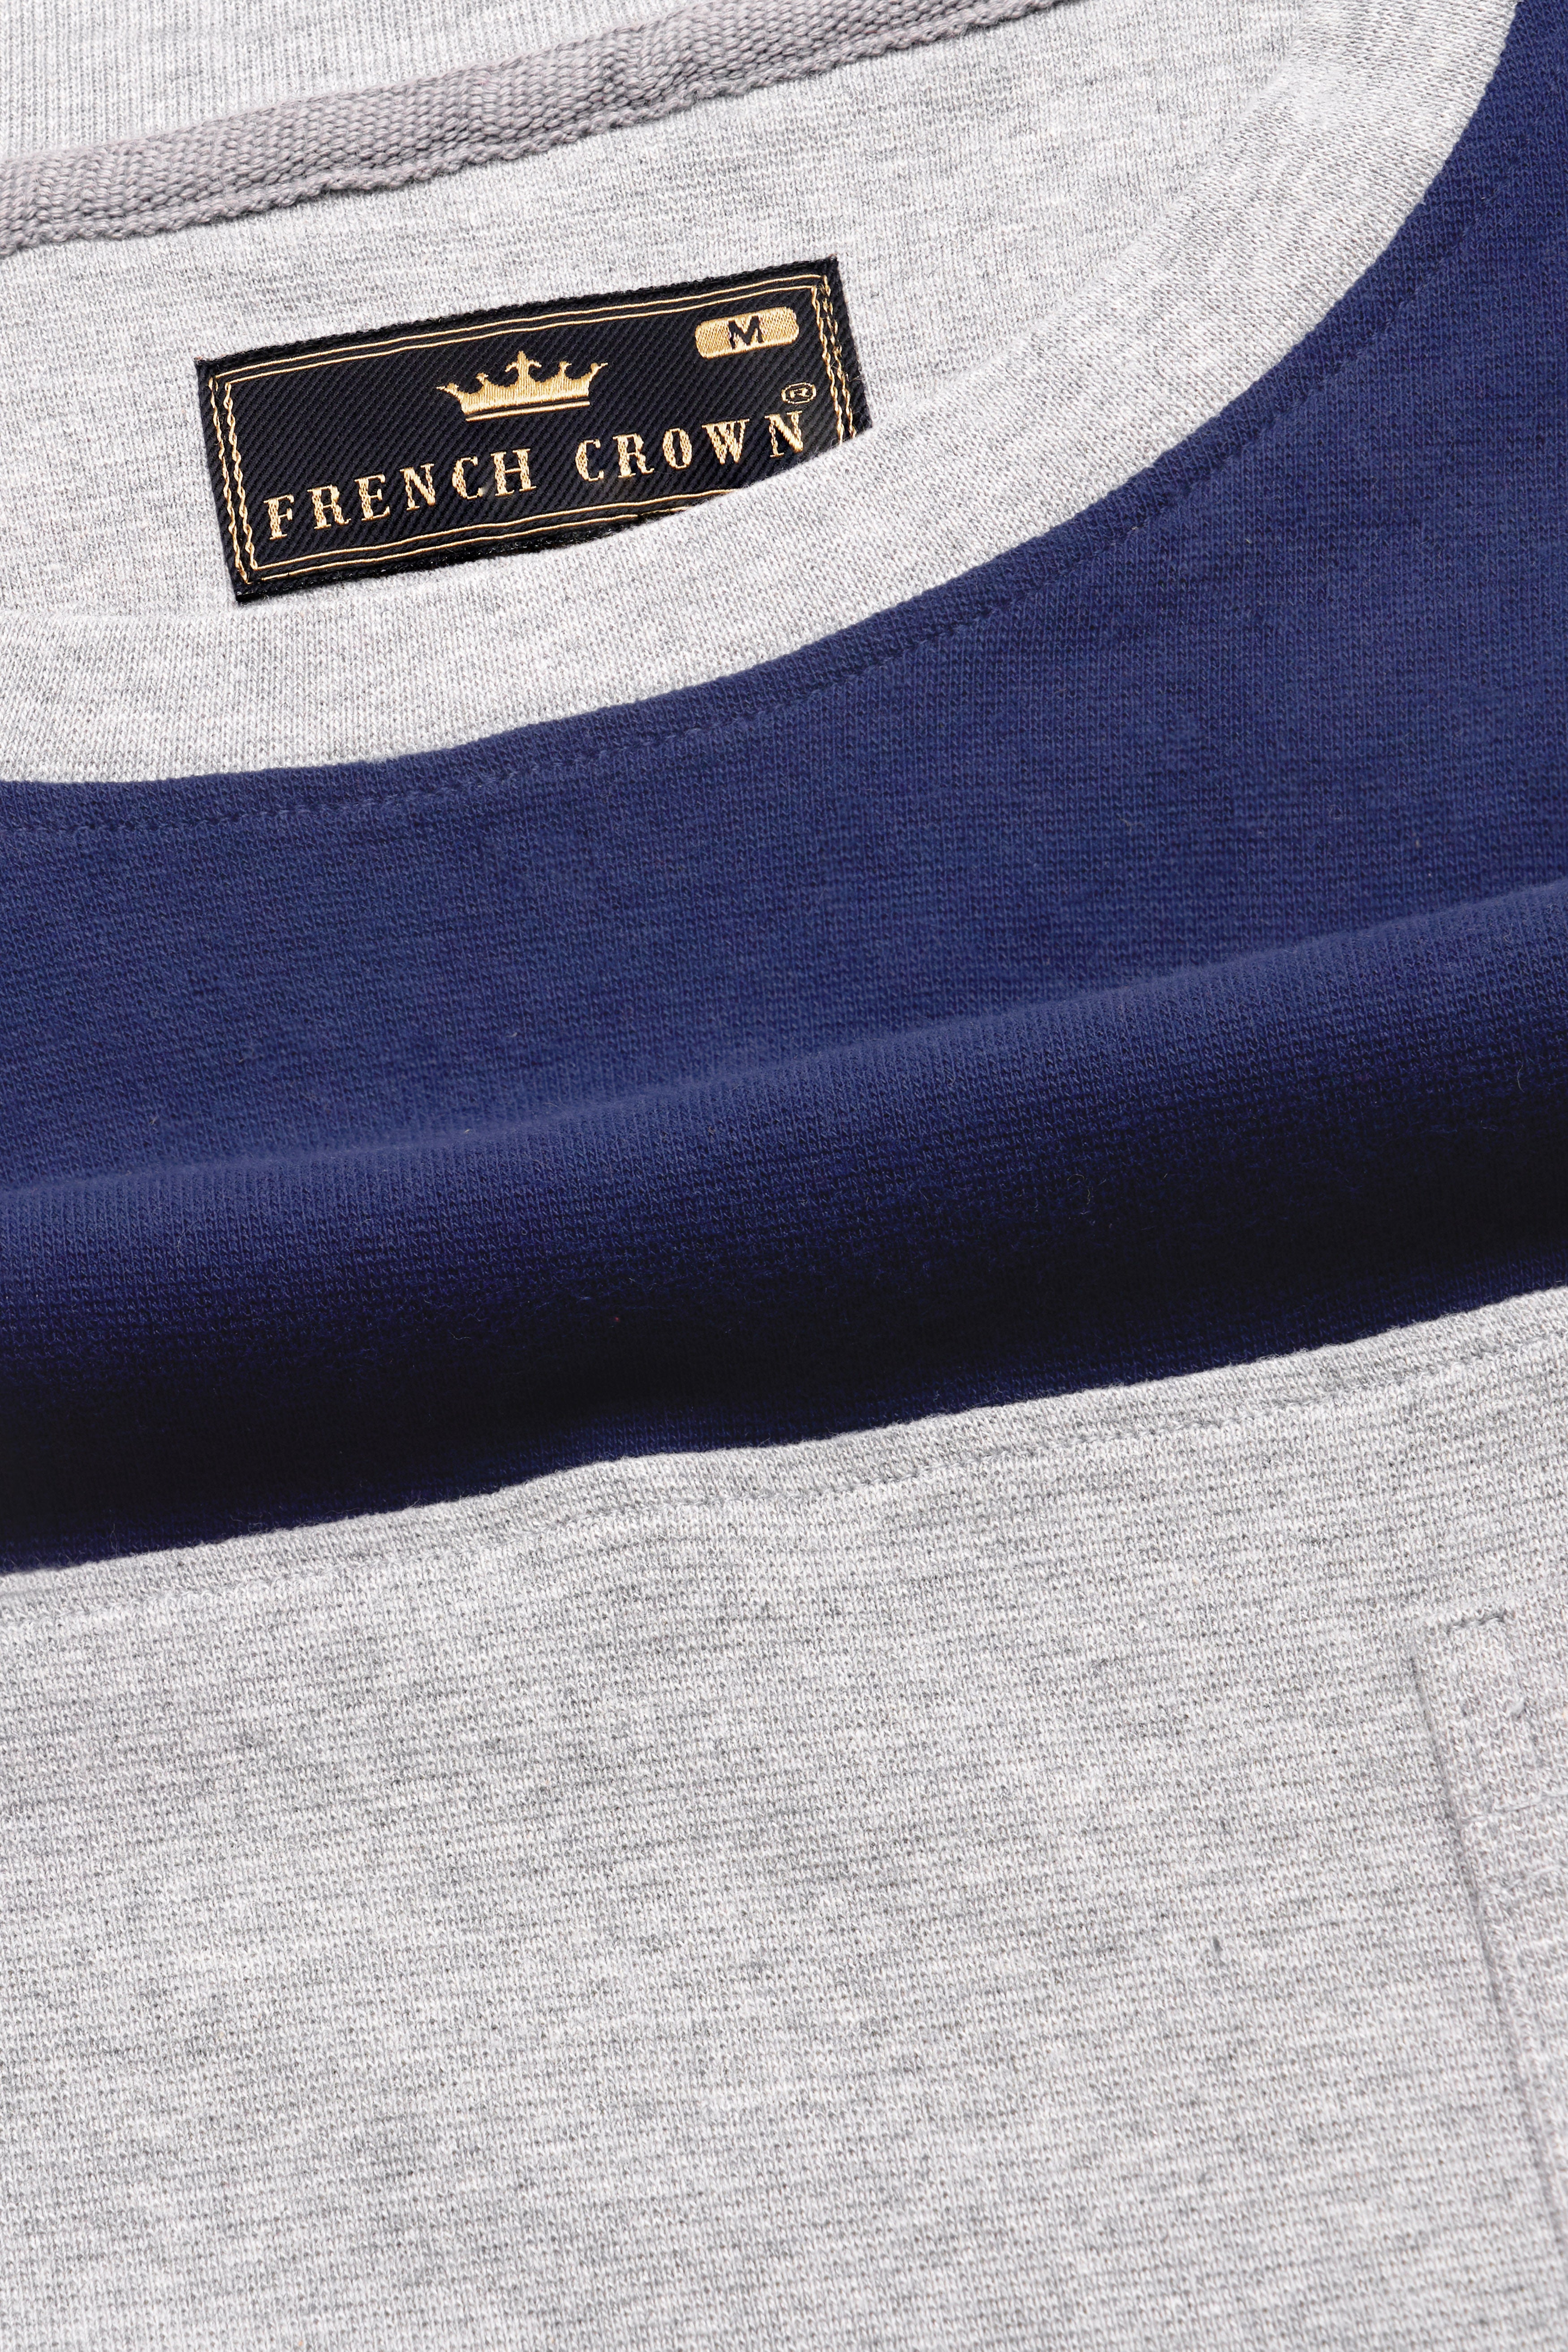 Timberwolf Gray and Rhino Blue Premium Cotton Jersey T-Shirt TS919-S, TS919-M, TS919-L, TS919-XL, TS919-XXL